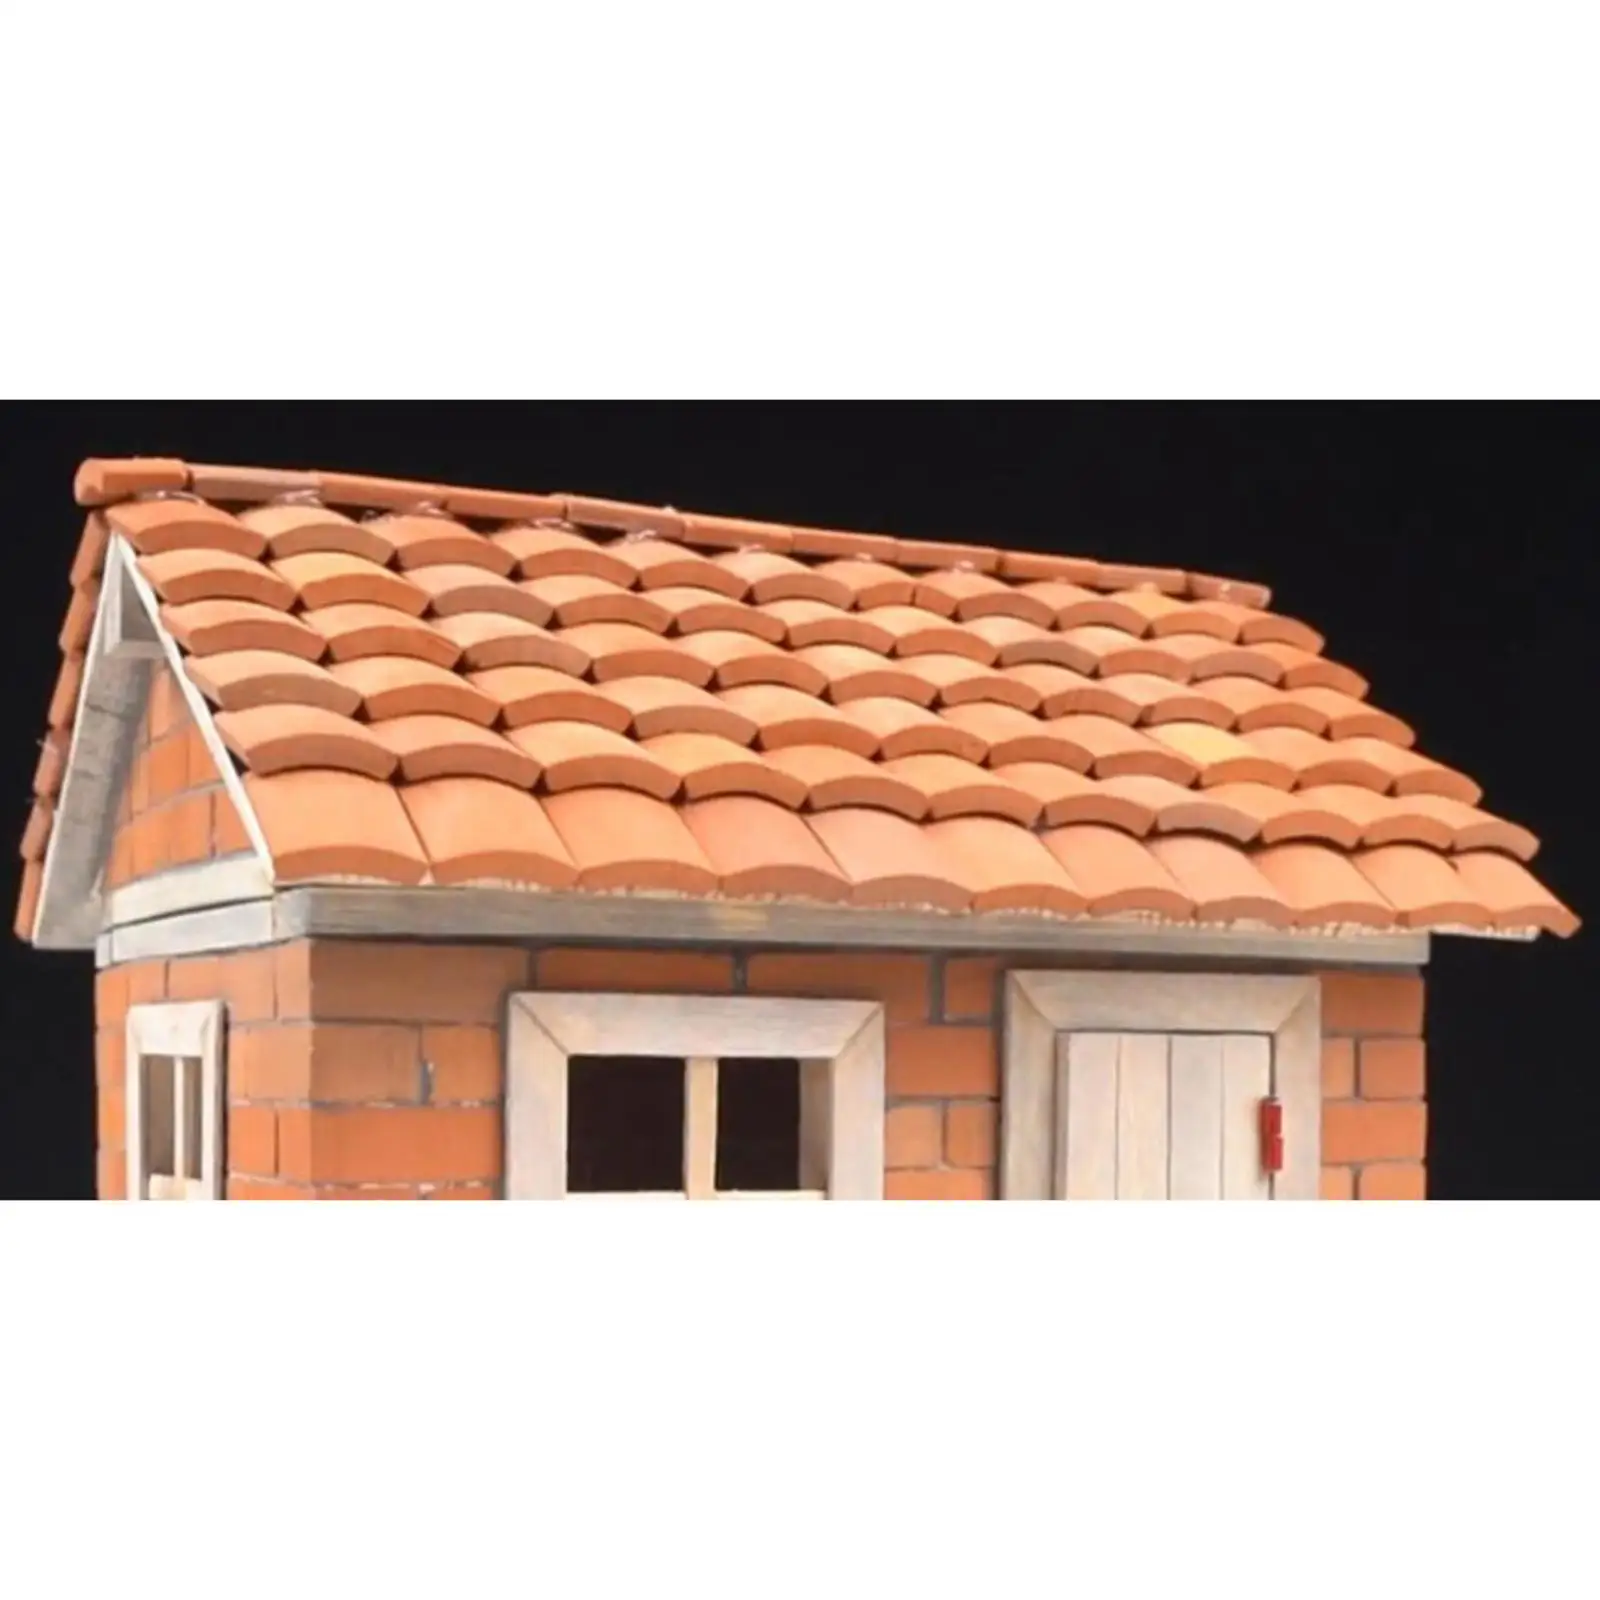 40x Mini Railway Wagon Load Bricks Roof Tile Turning Scenario Landscape Modelling 12x10mm Sand Table DIY Material Diorama Bricks